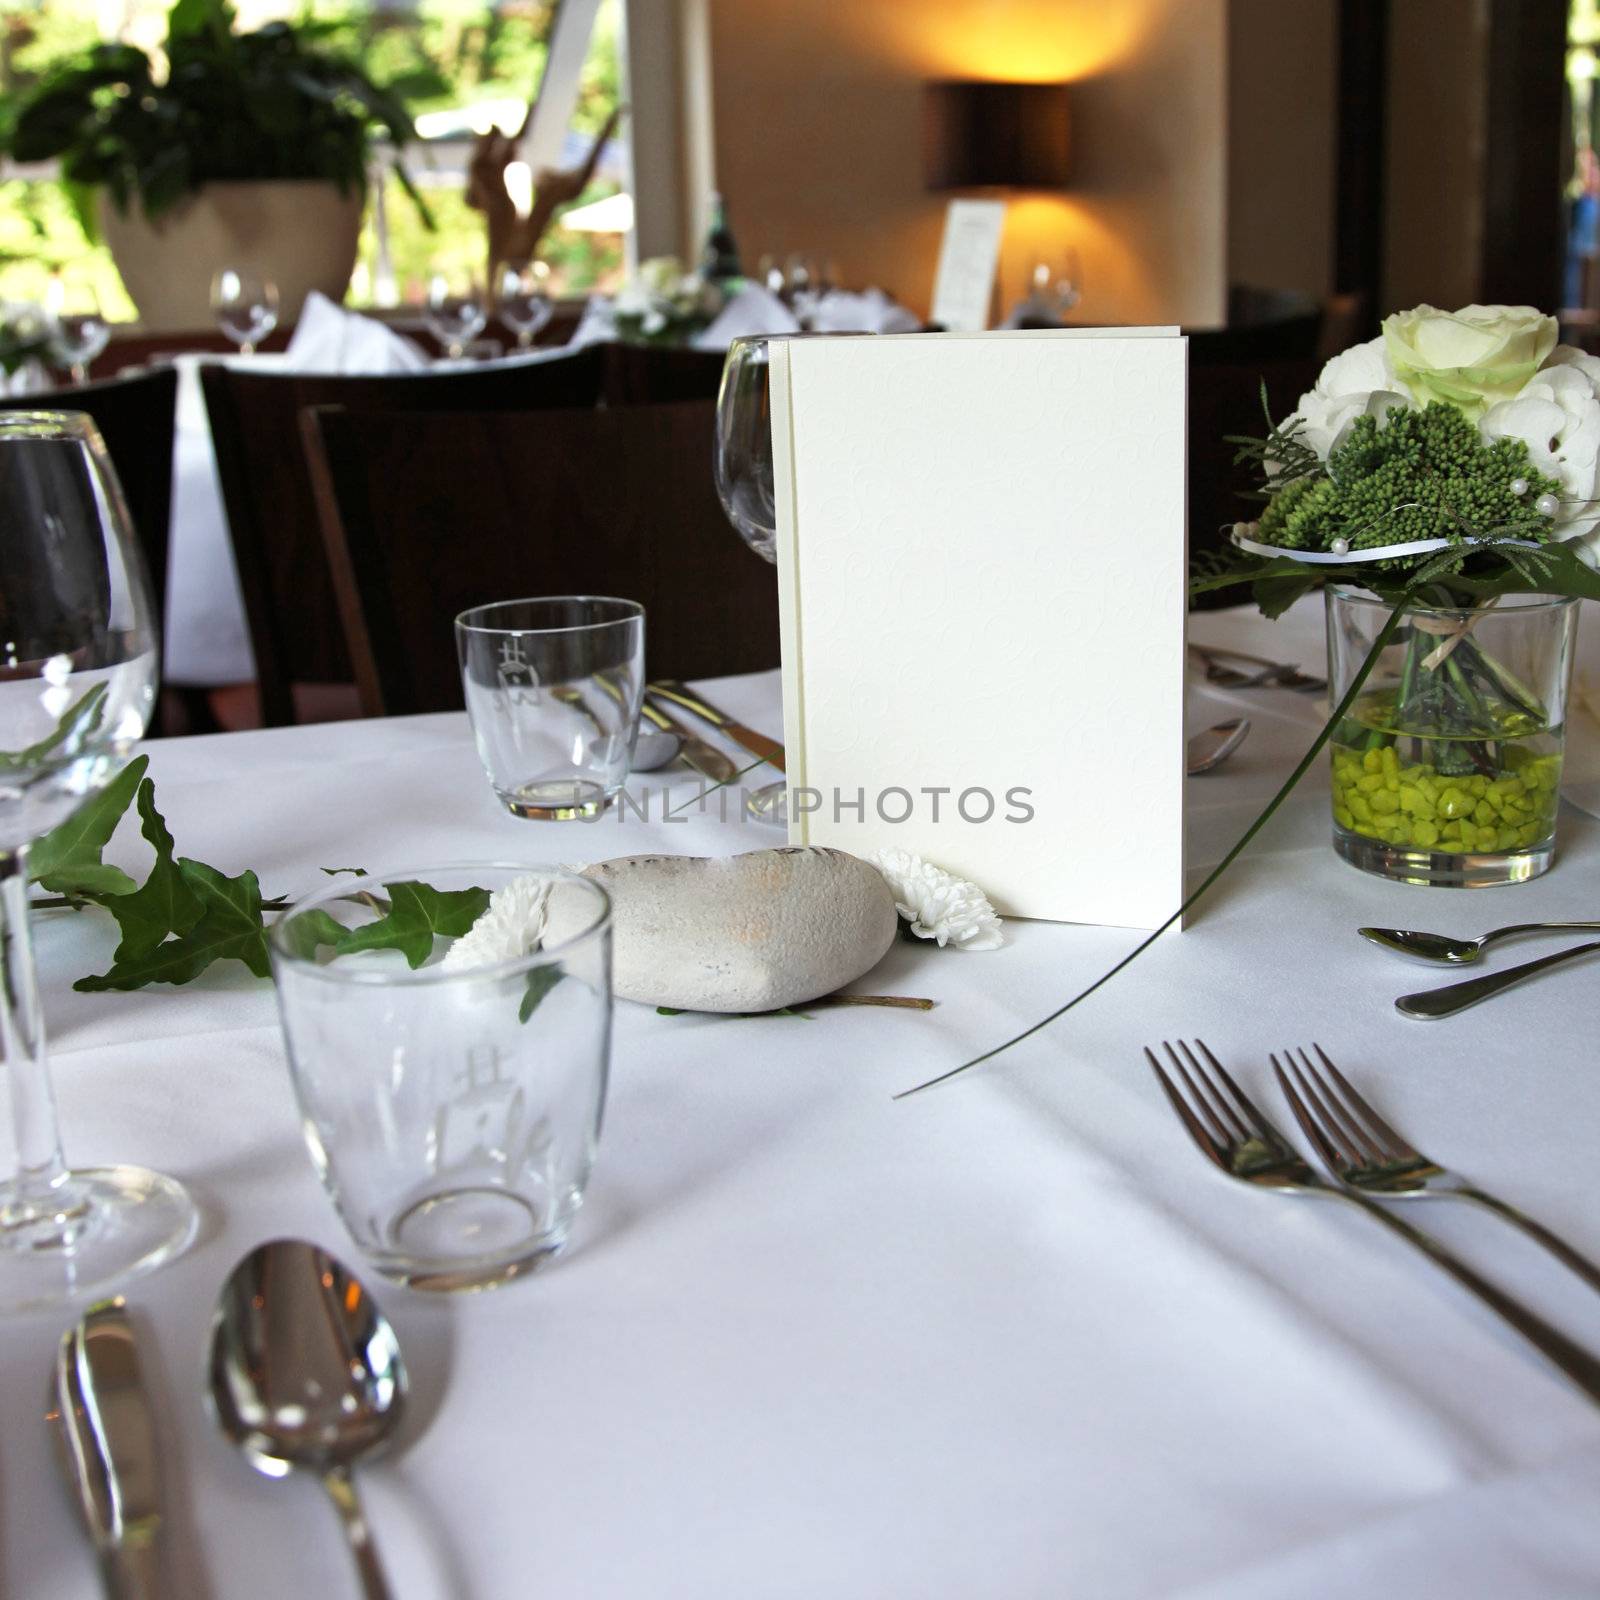 menu card on an elegantly set table  by Farina6000